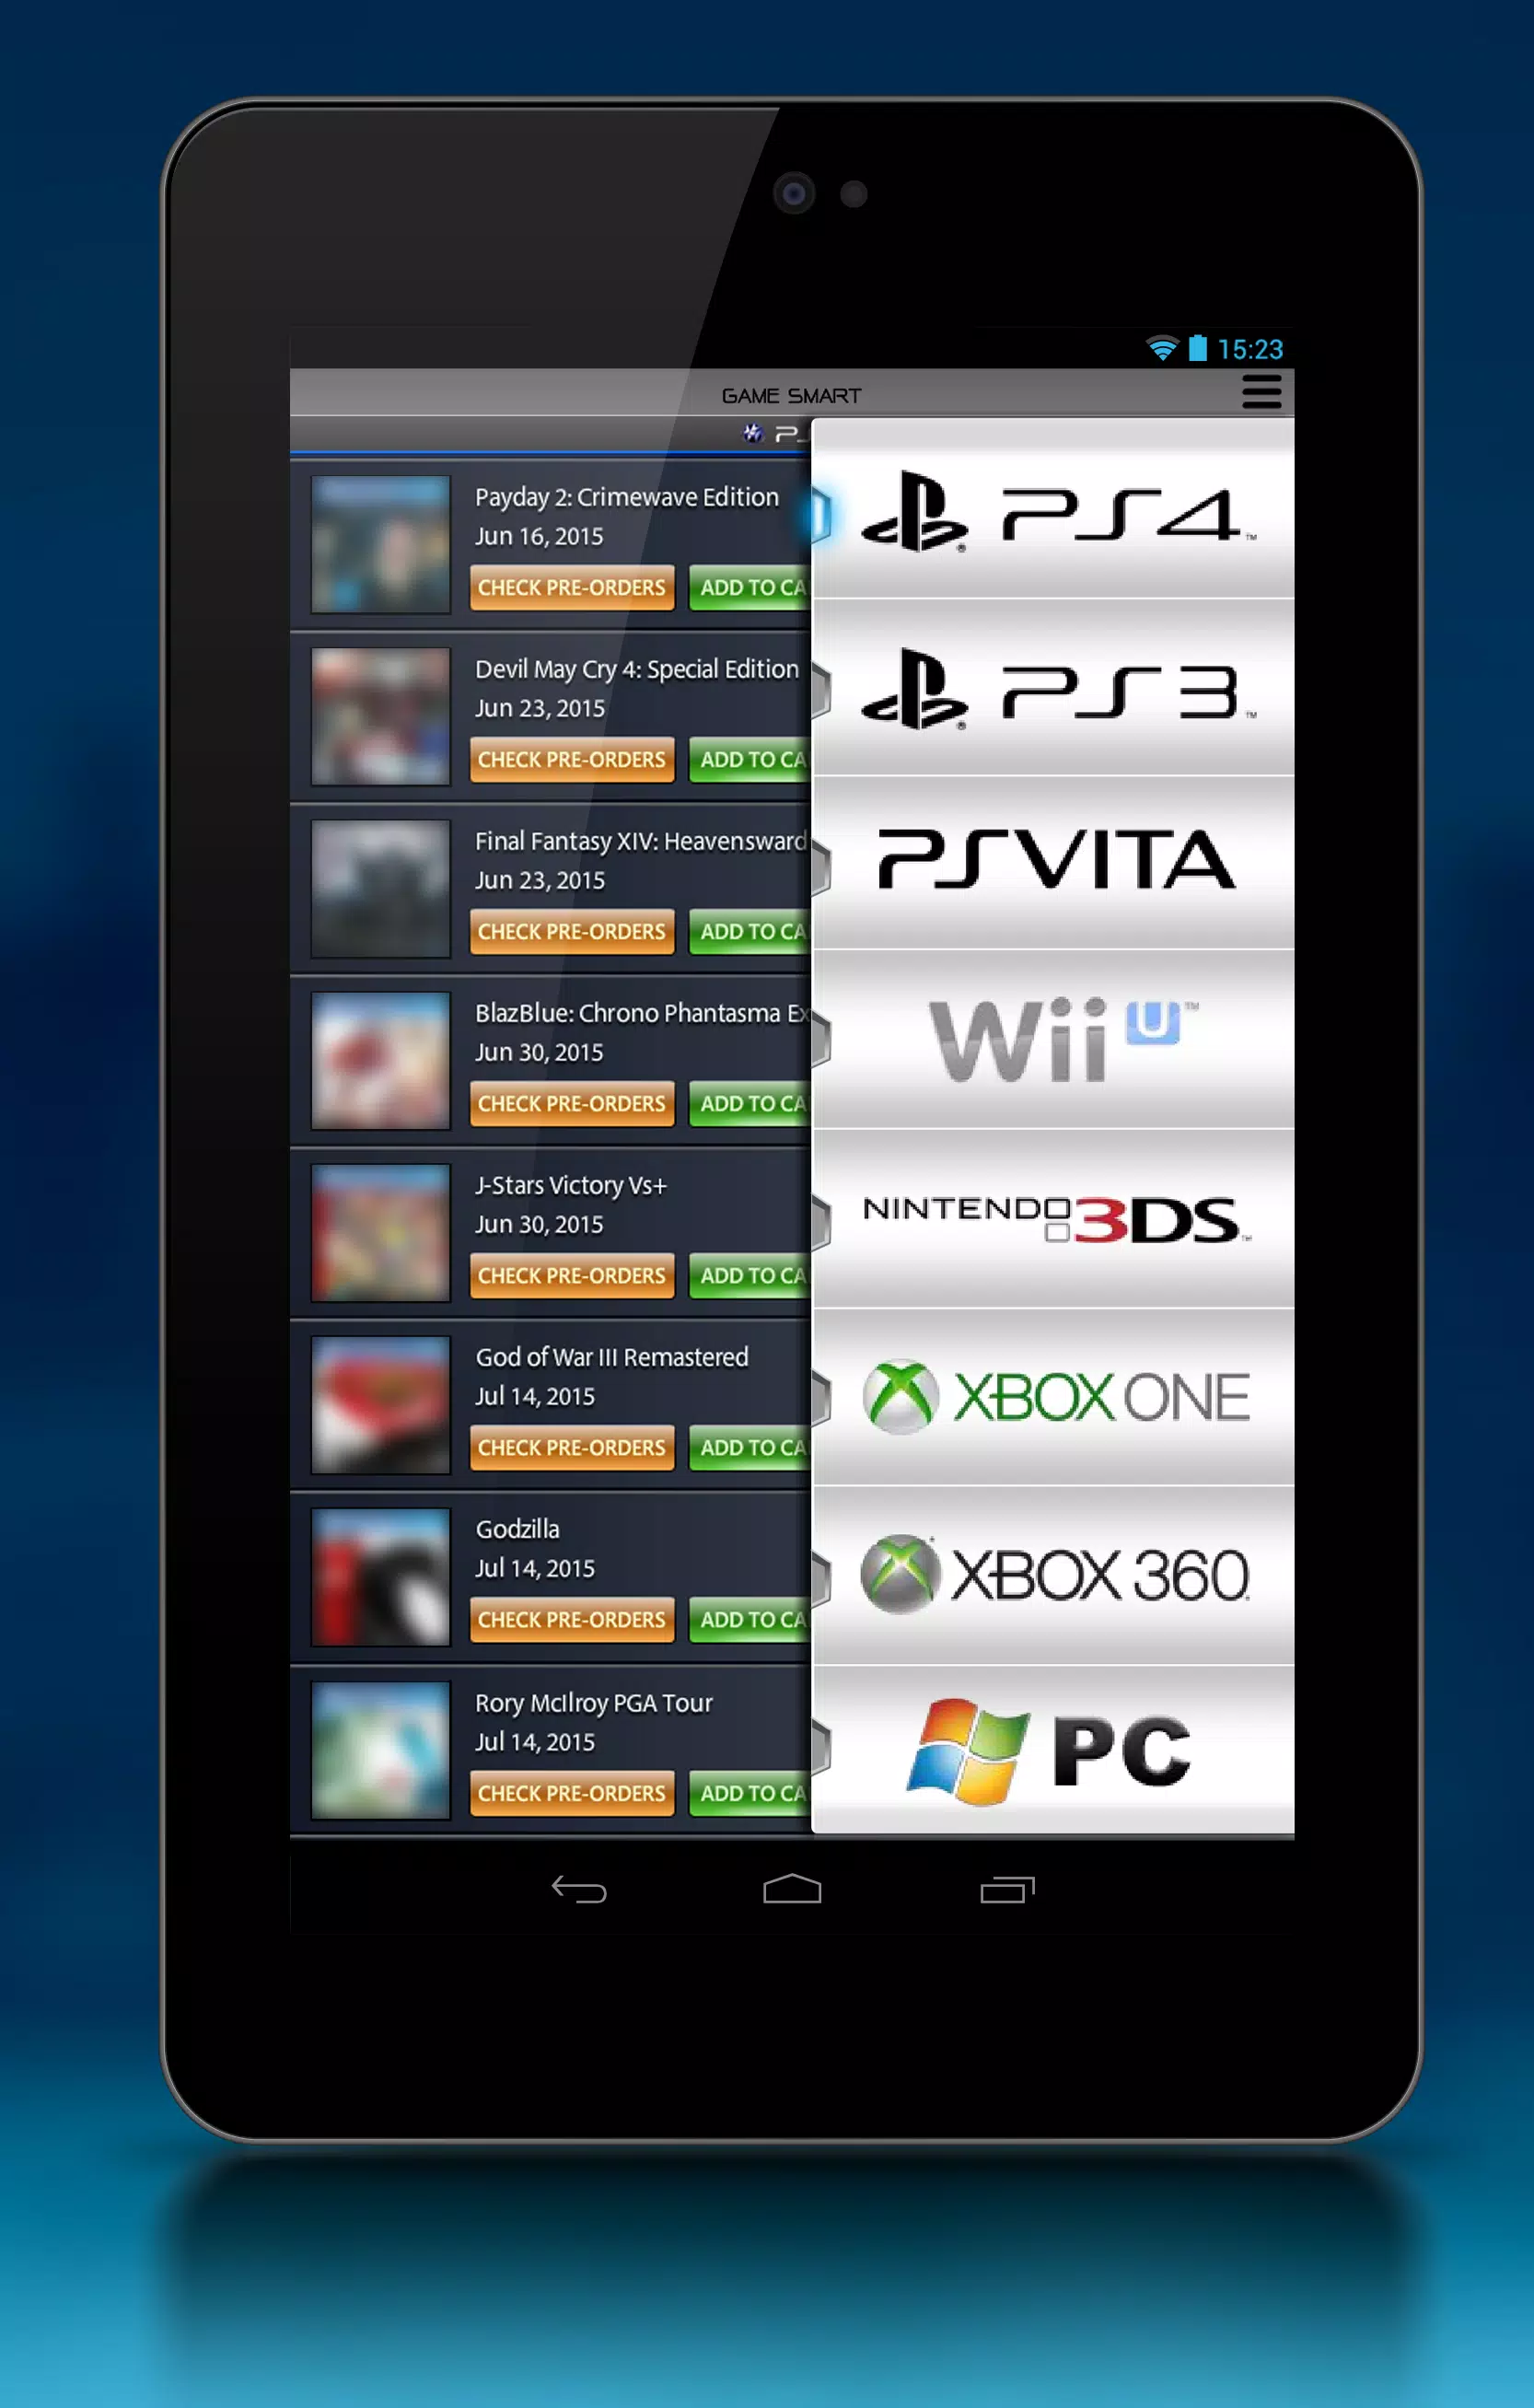 Gamesmart - Microsoft Apps